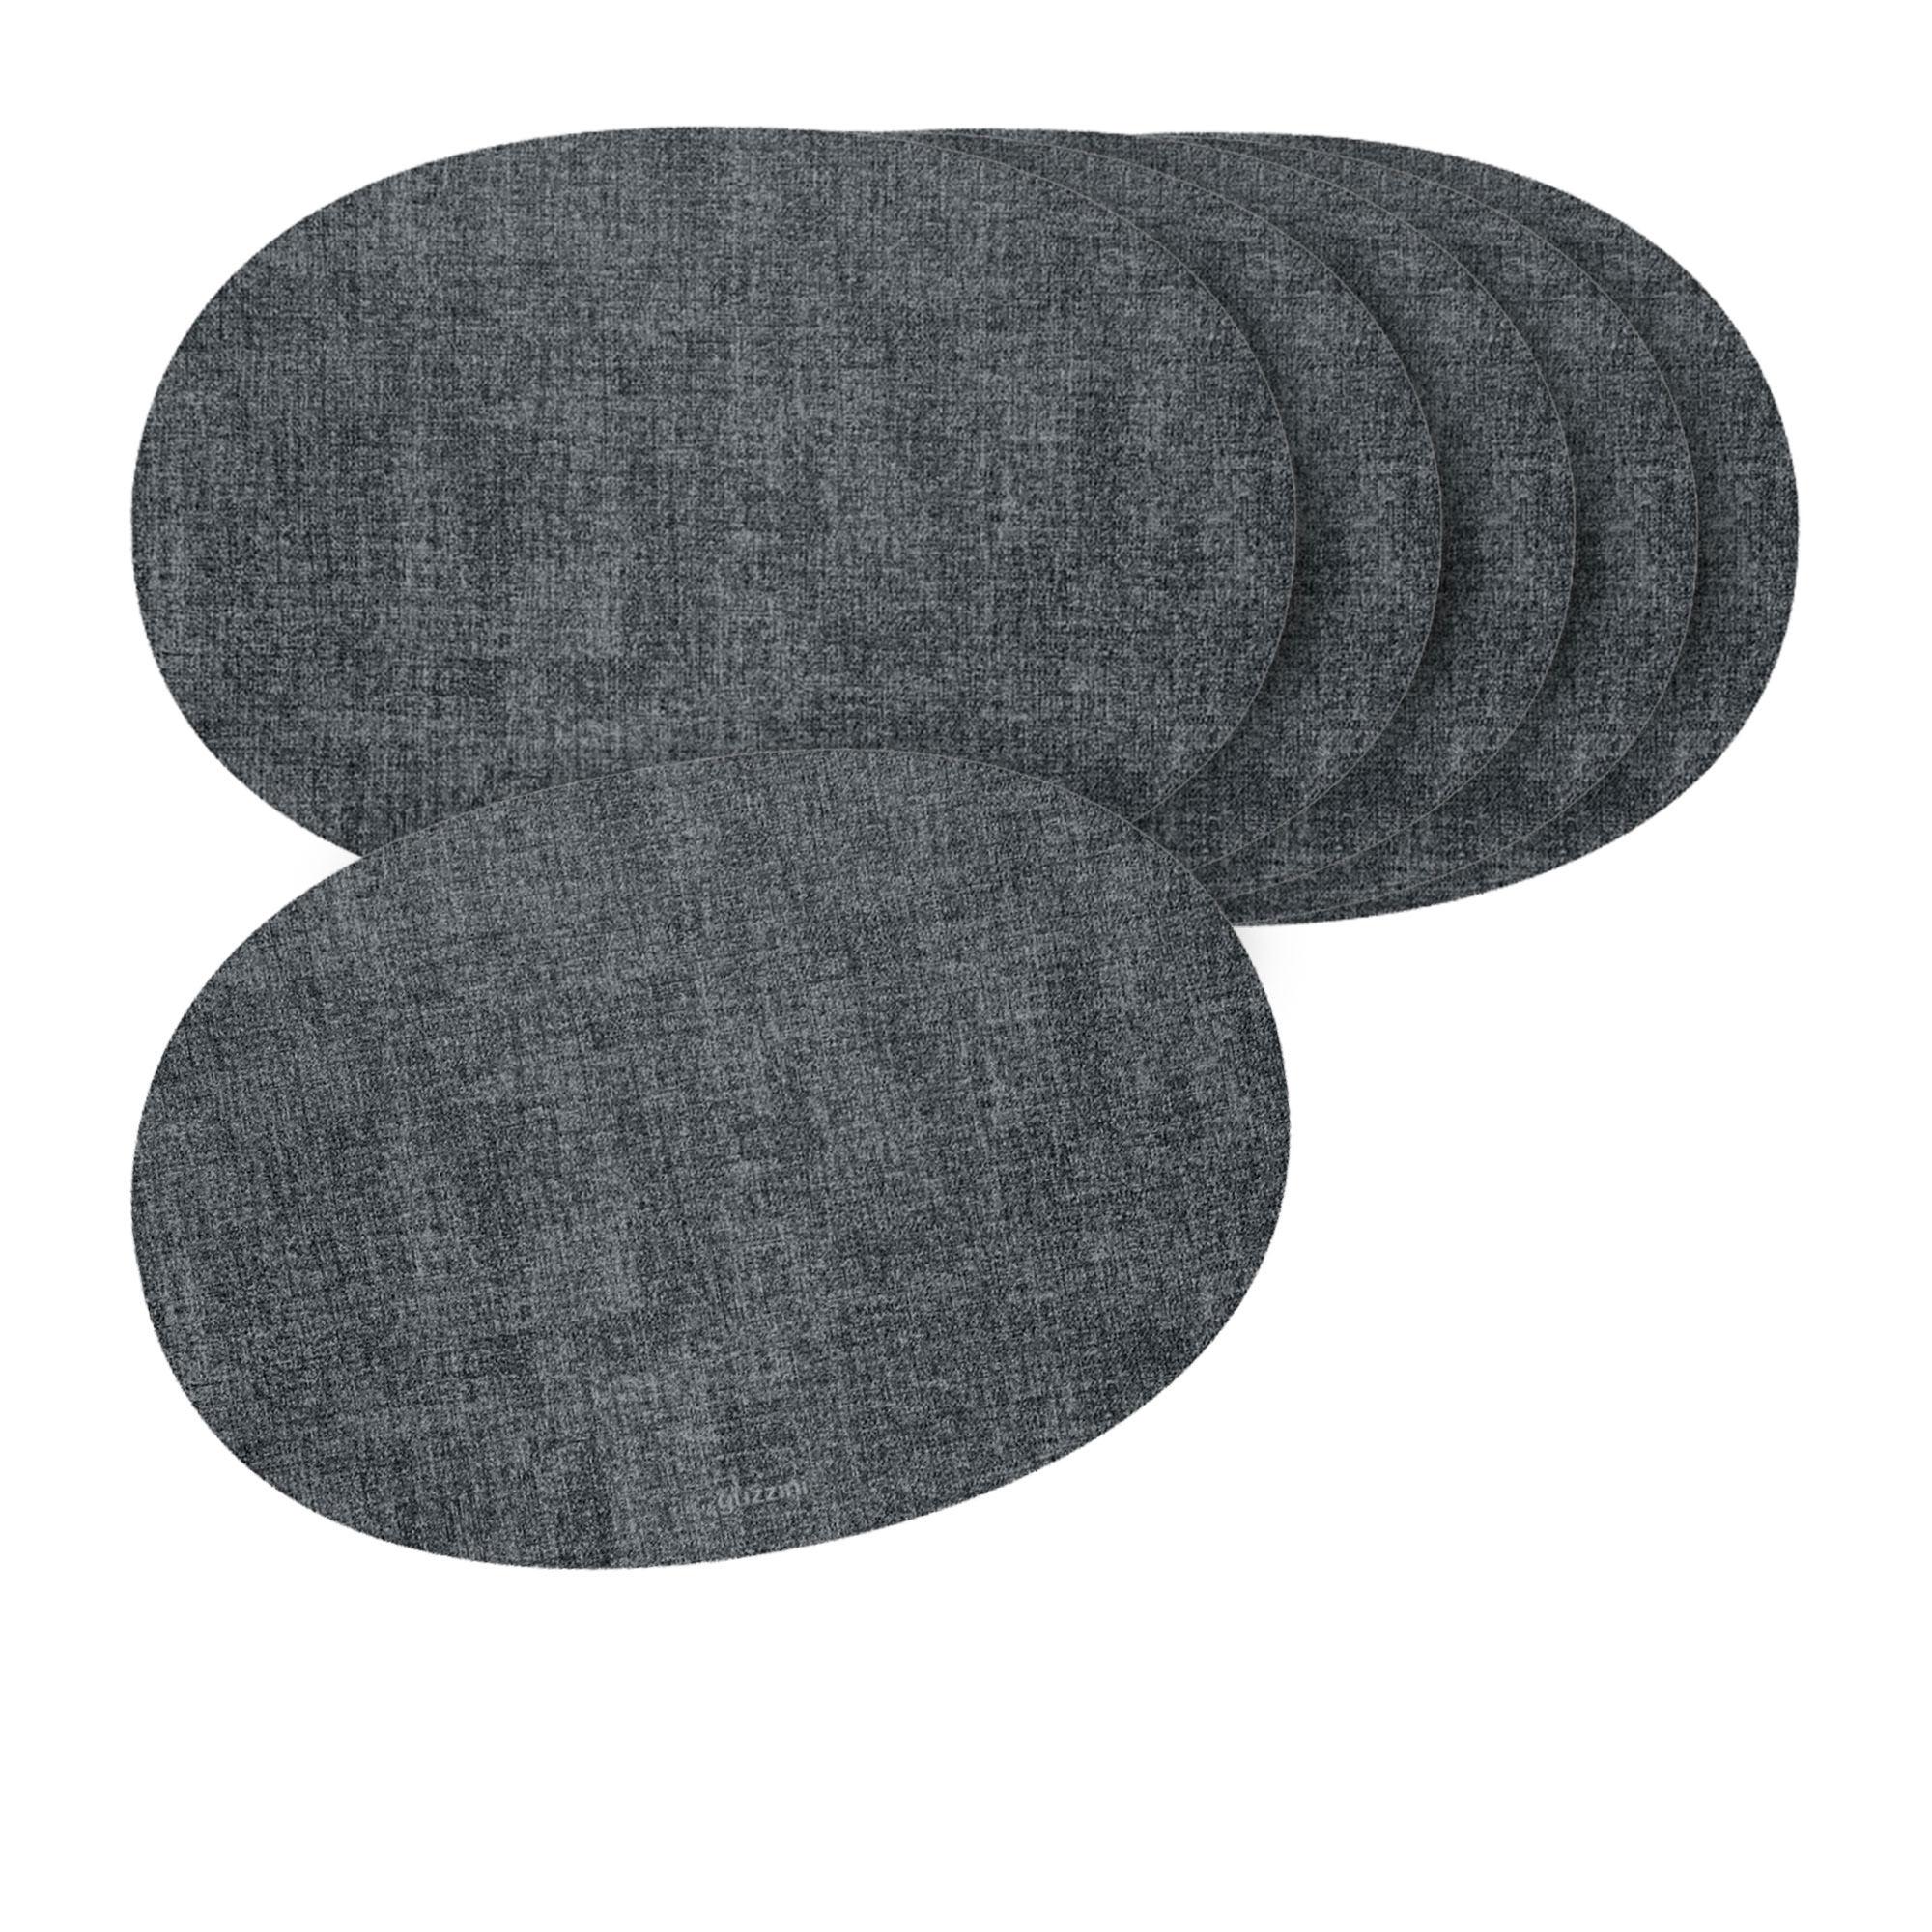 Guzzini Oval Placemat Set of 6 Grey Image 1